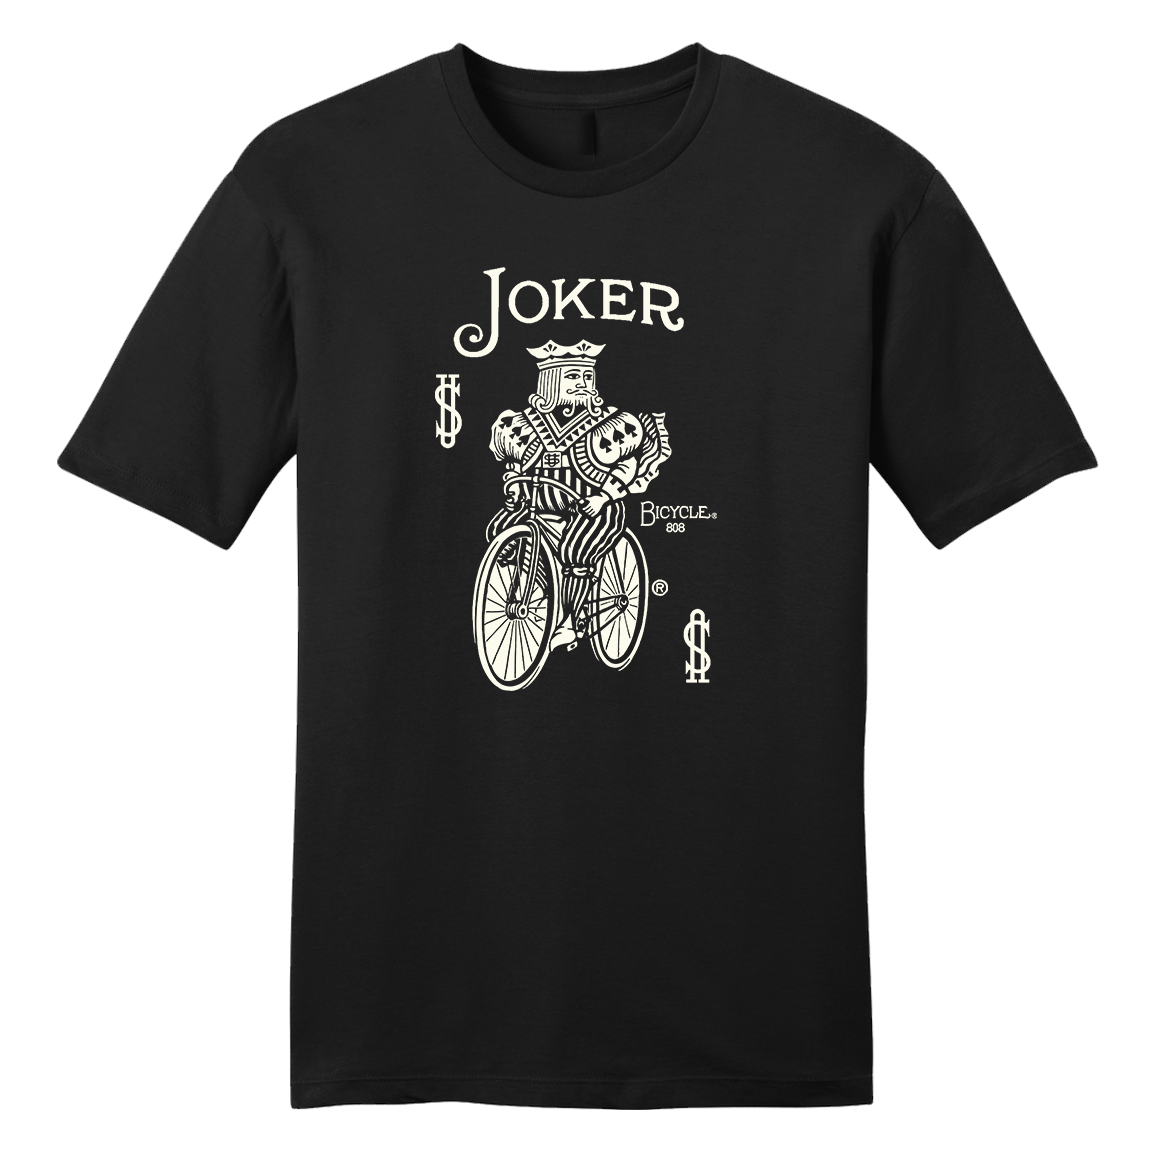 Bicycle Joker - Cincy Shirts